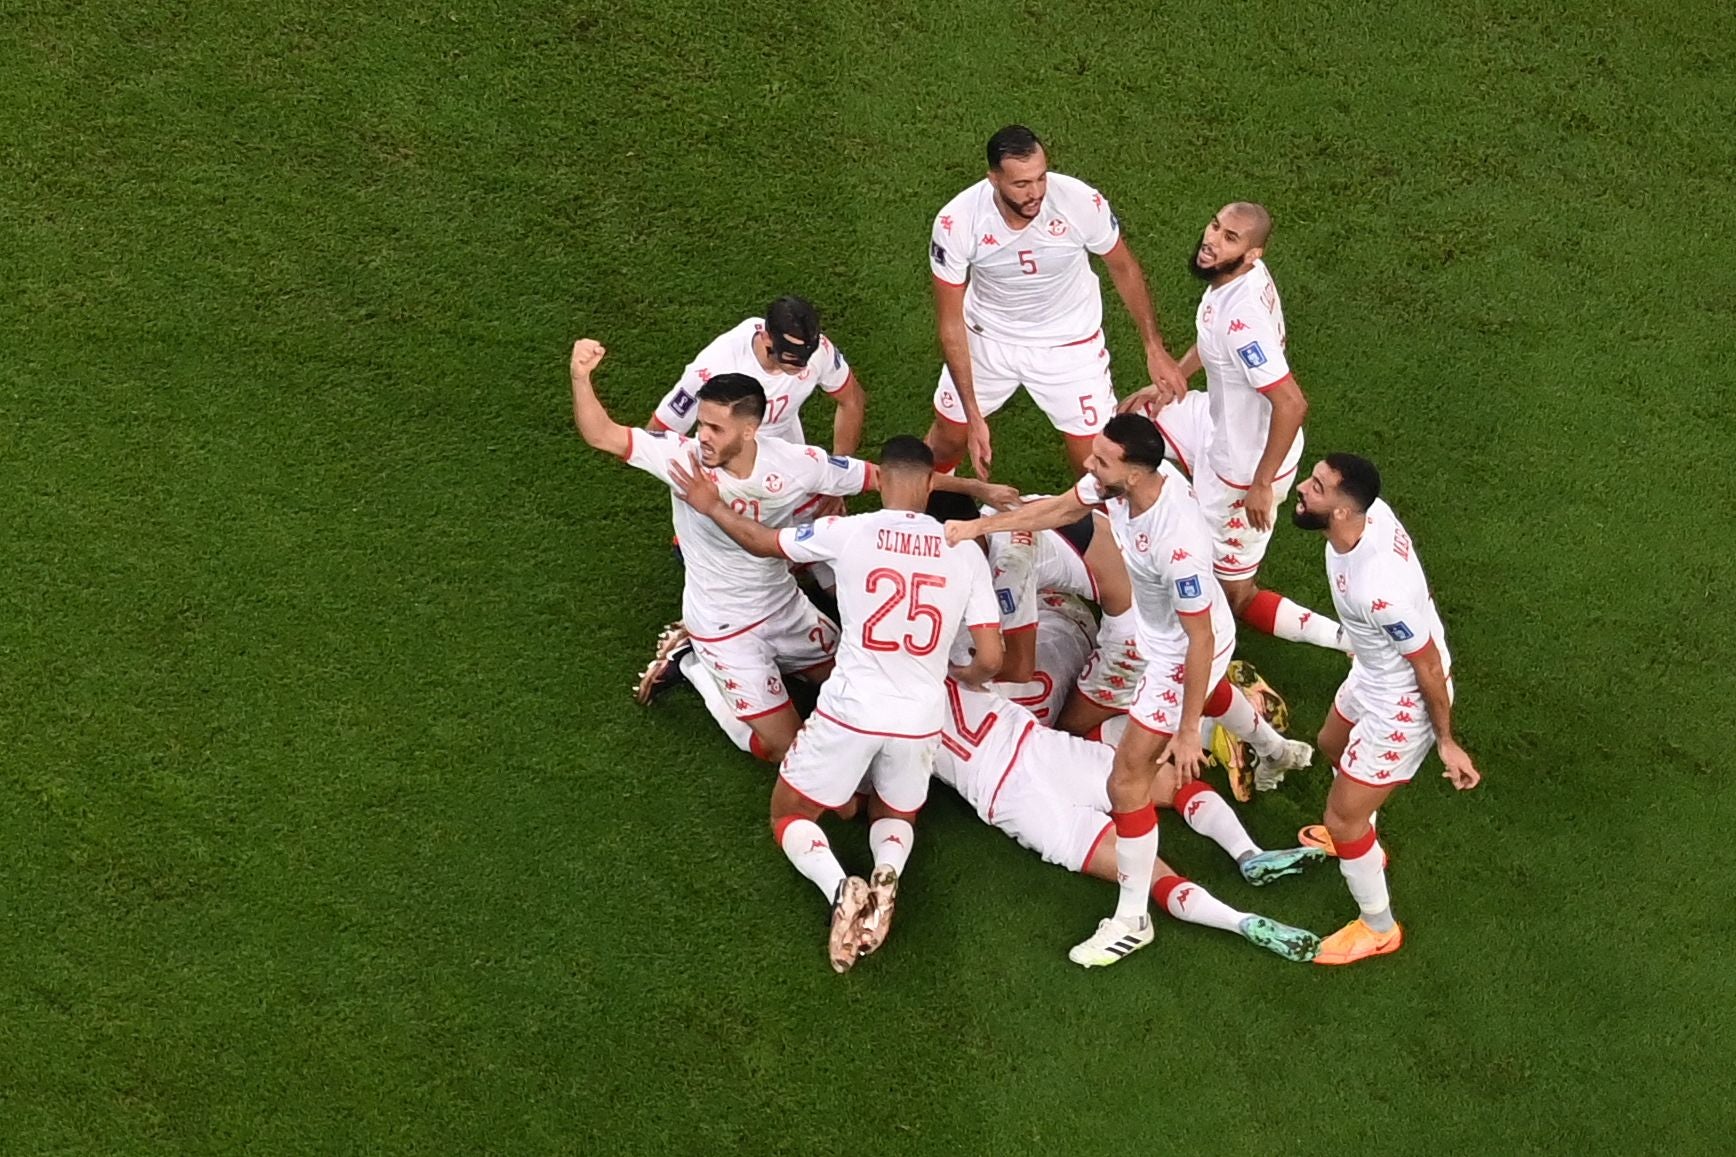 Tunisia celebrate their goal against France